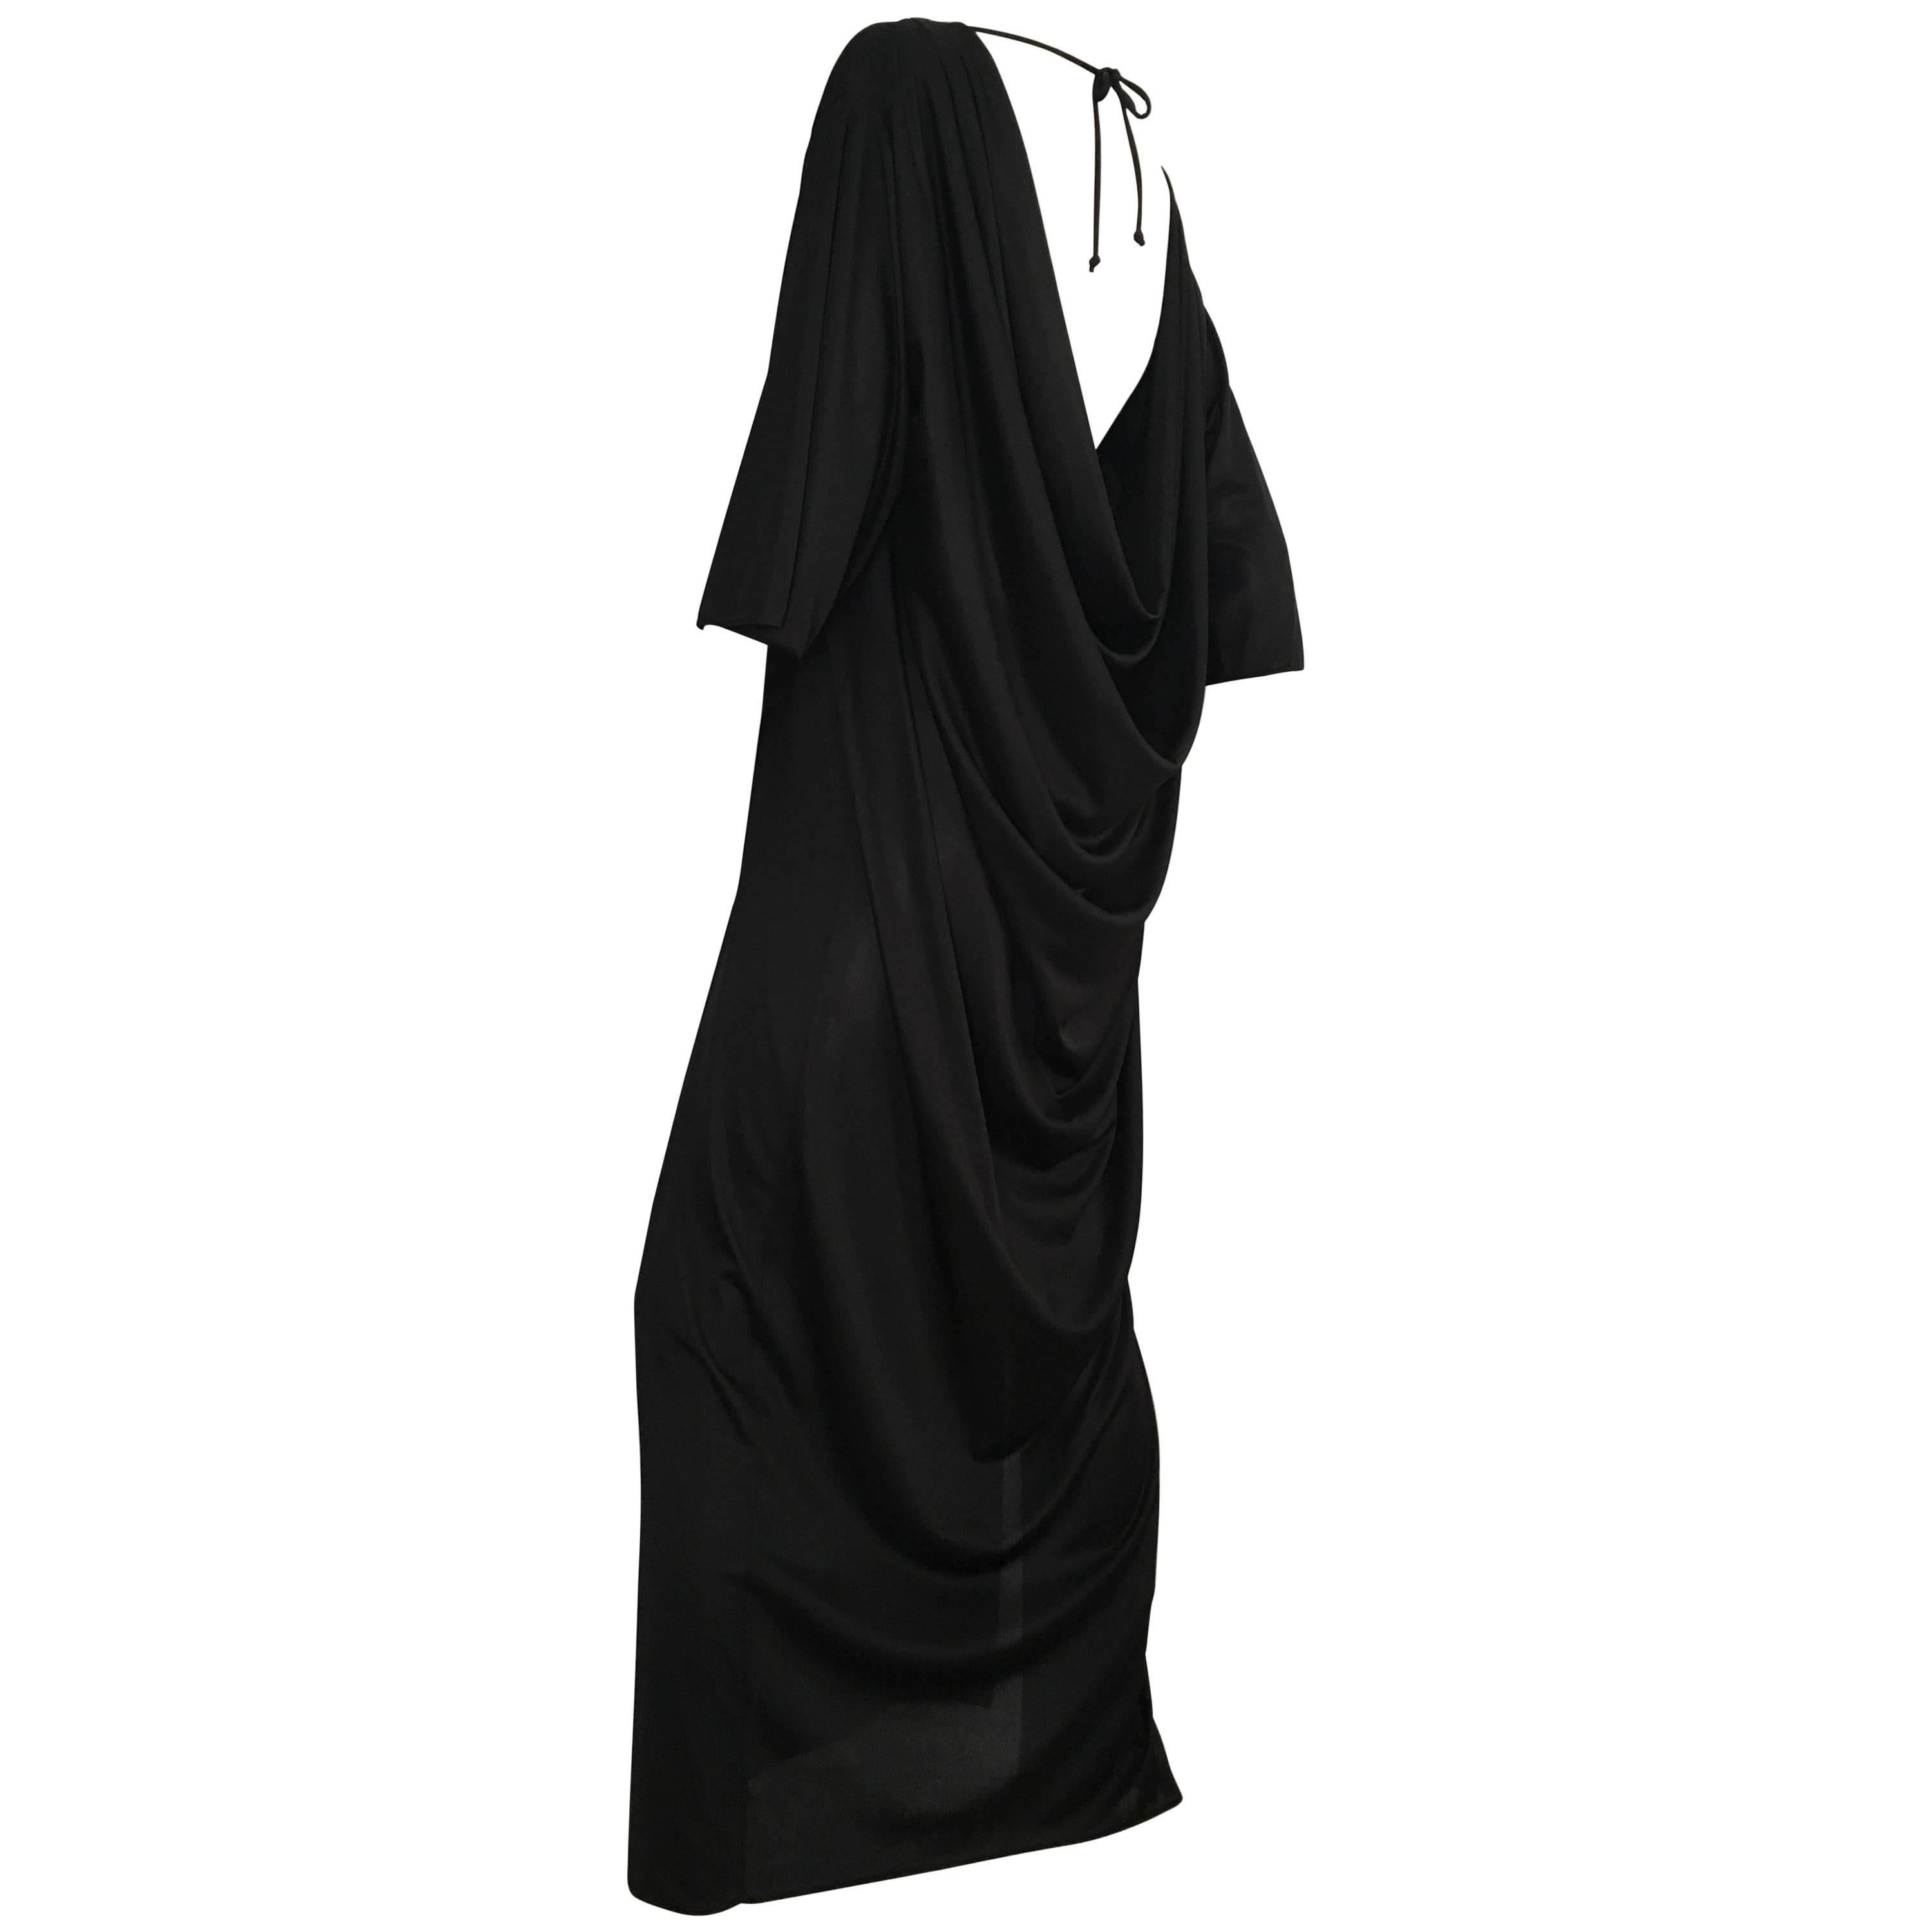 Bill Blass 1970s Flowing Black Gown. For Sale